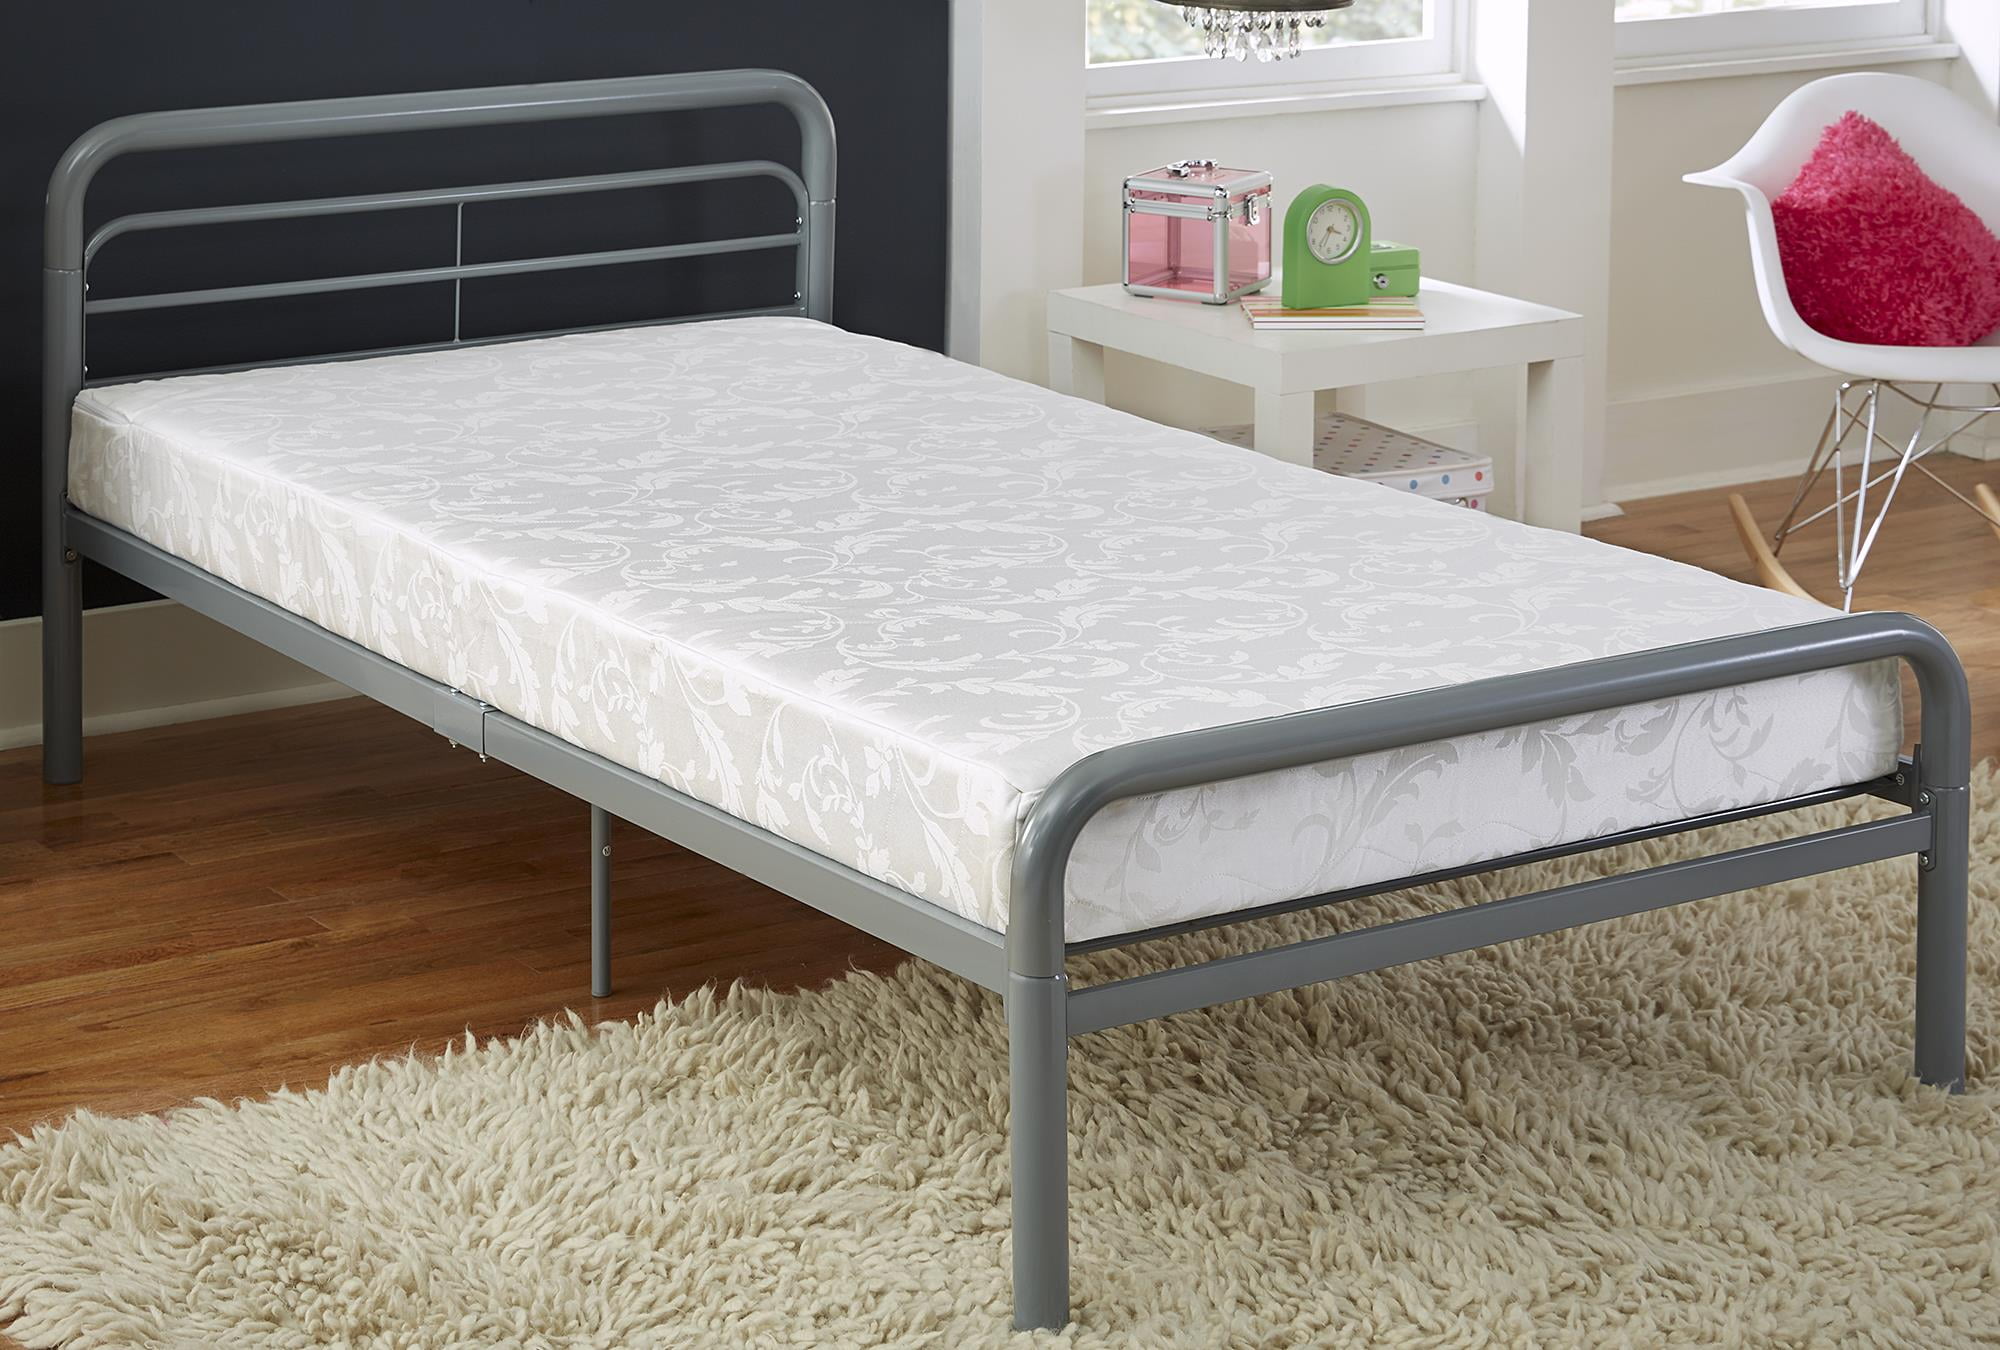 Polyester Filled Bunk Bed Mattress, Twin Size Bunk Bed Mattress